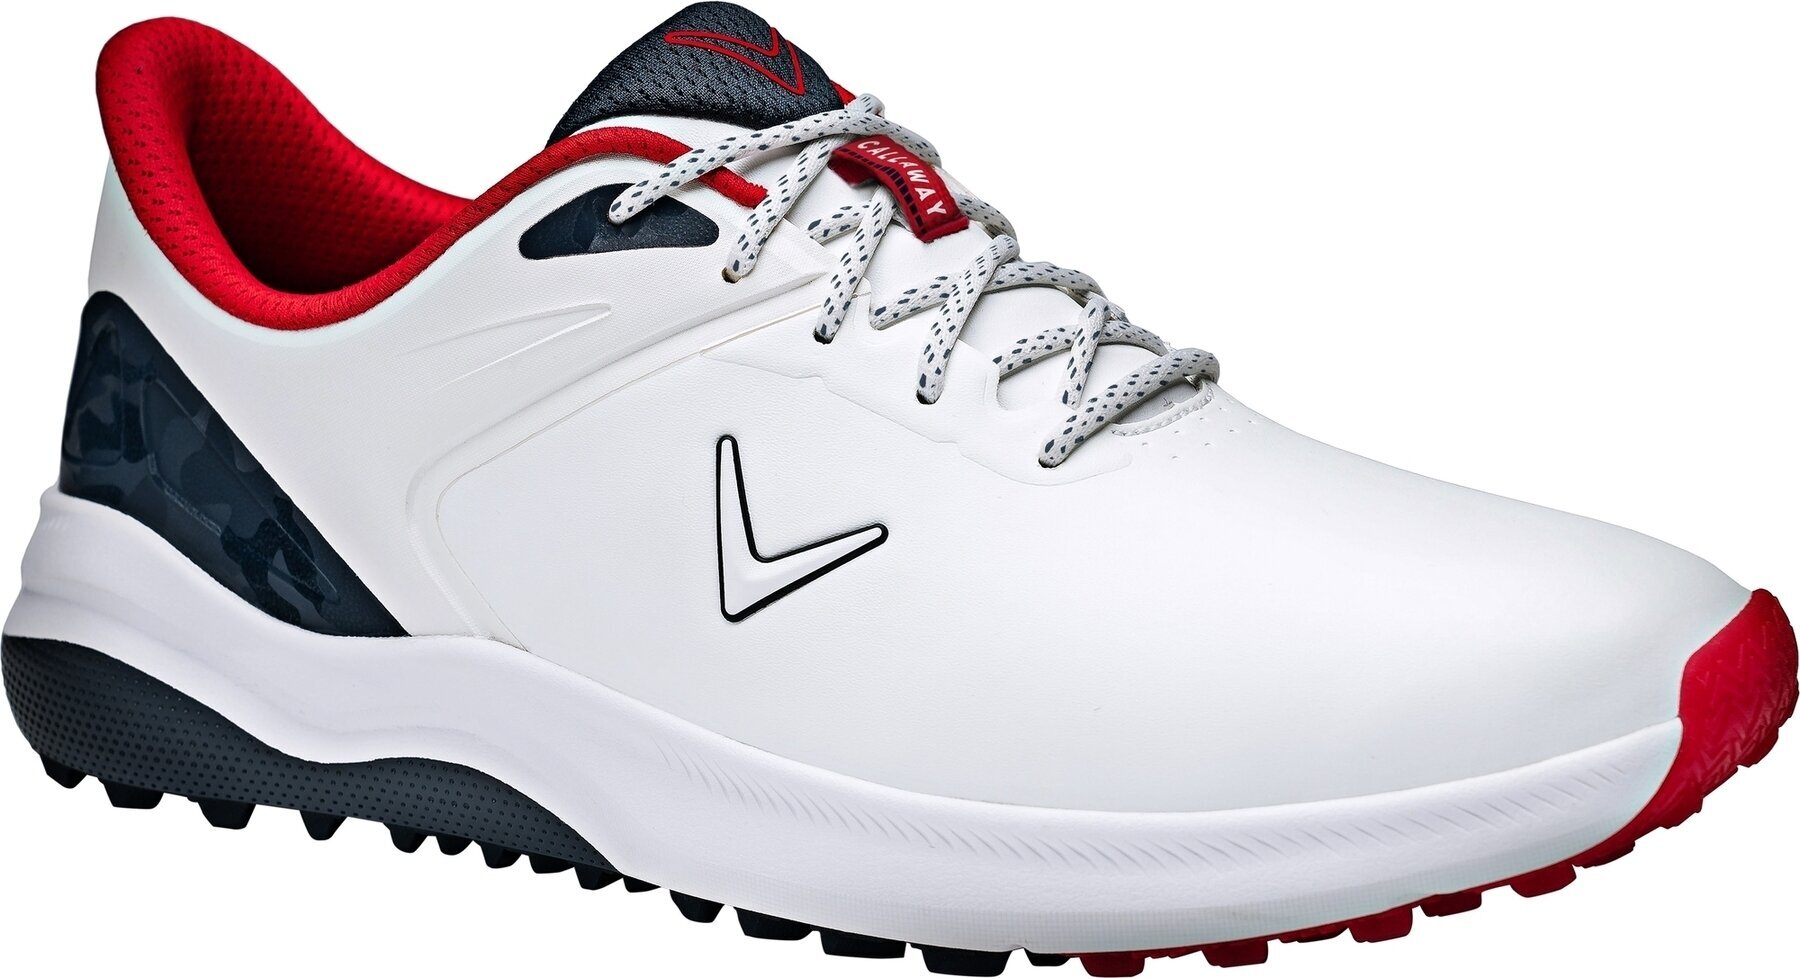 Miesten golfkengät Callaway Lazer Mens Golf Shoes White/Navy/Red 47